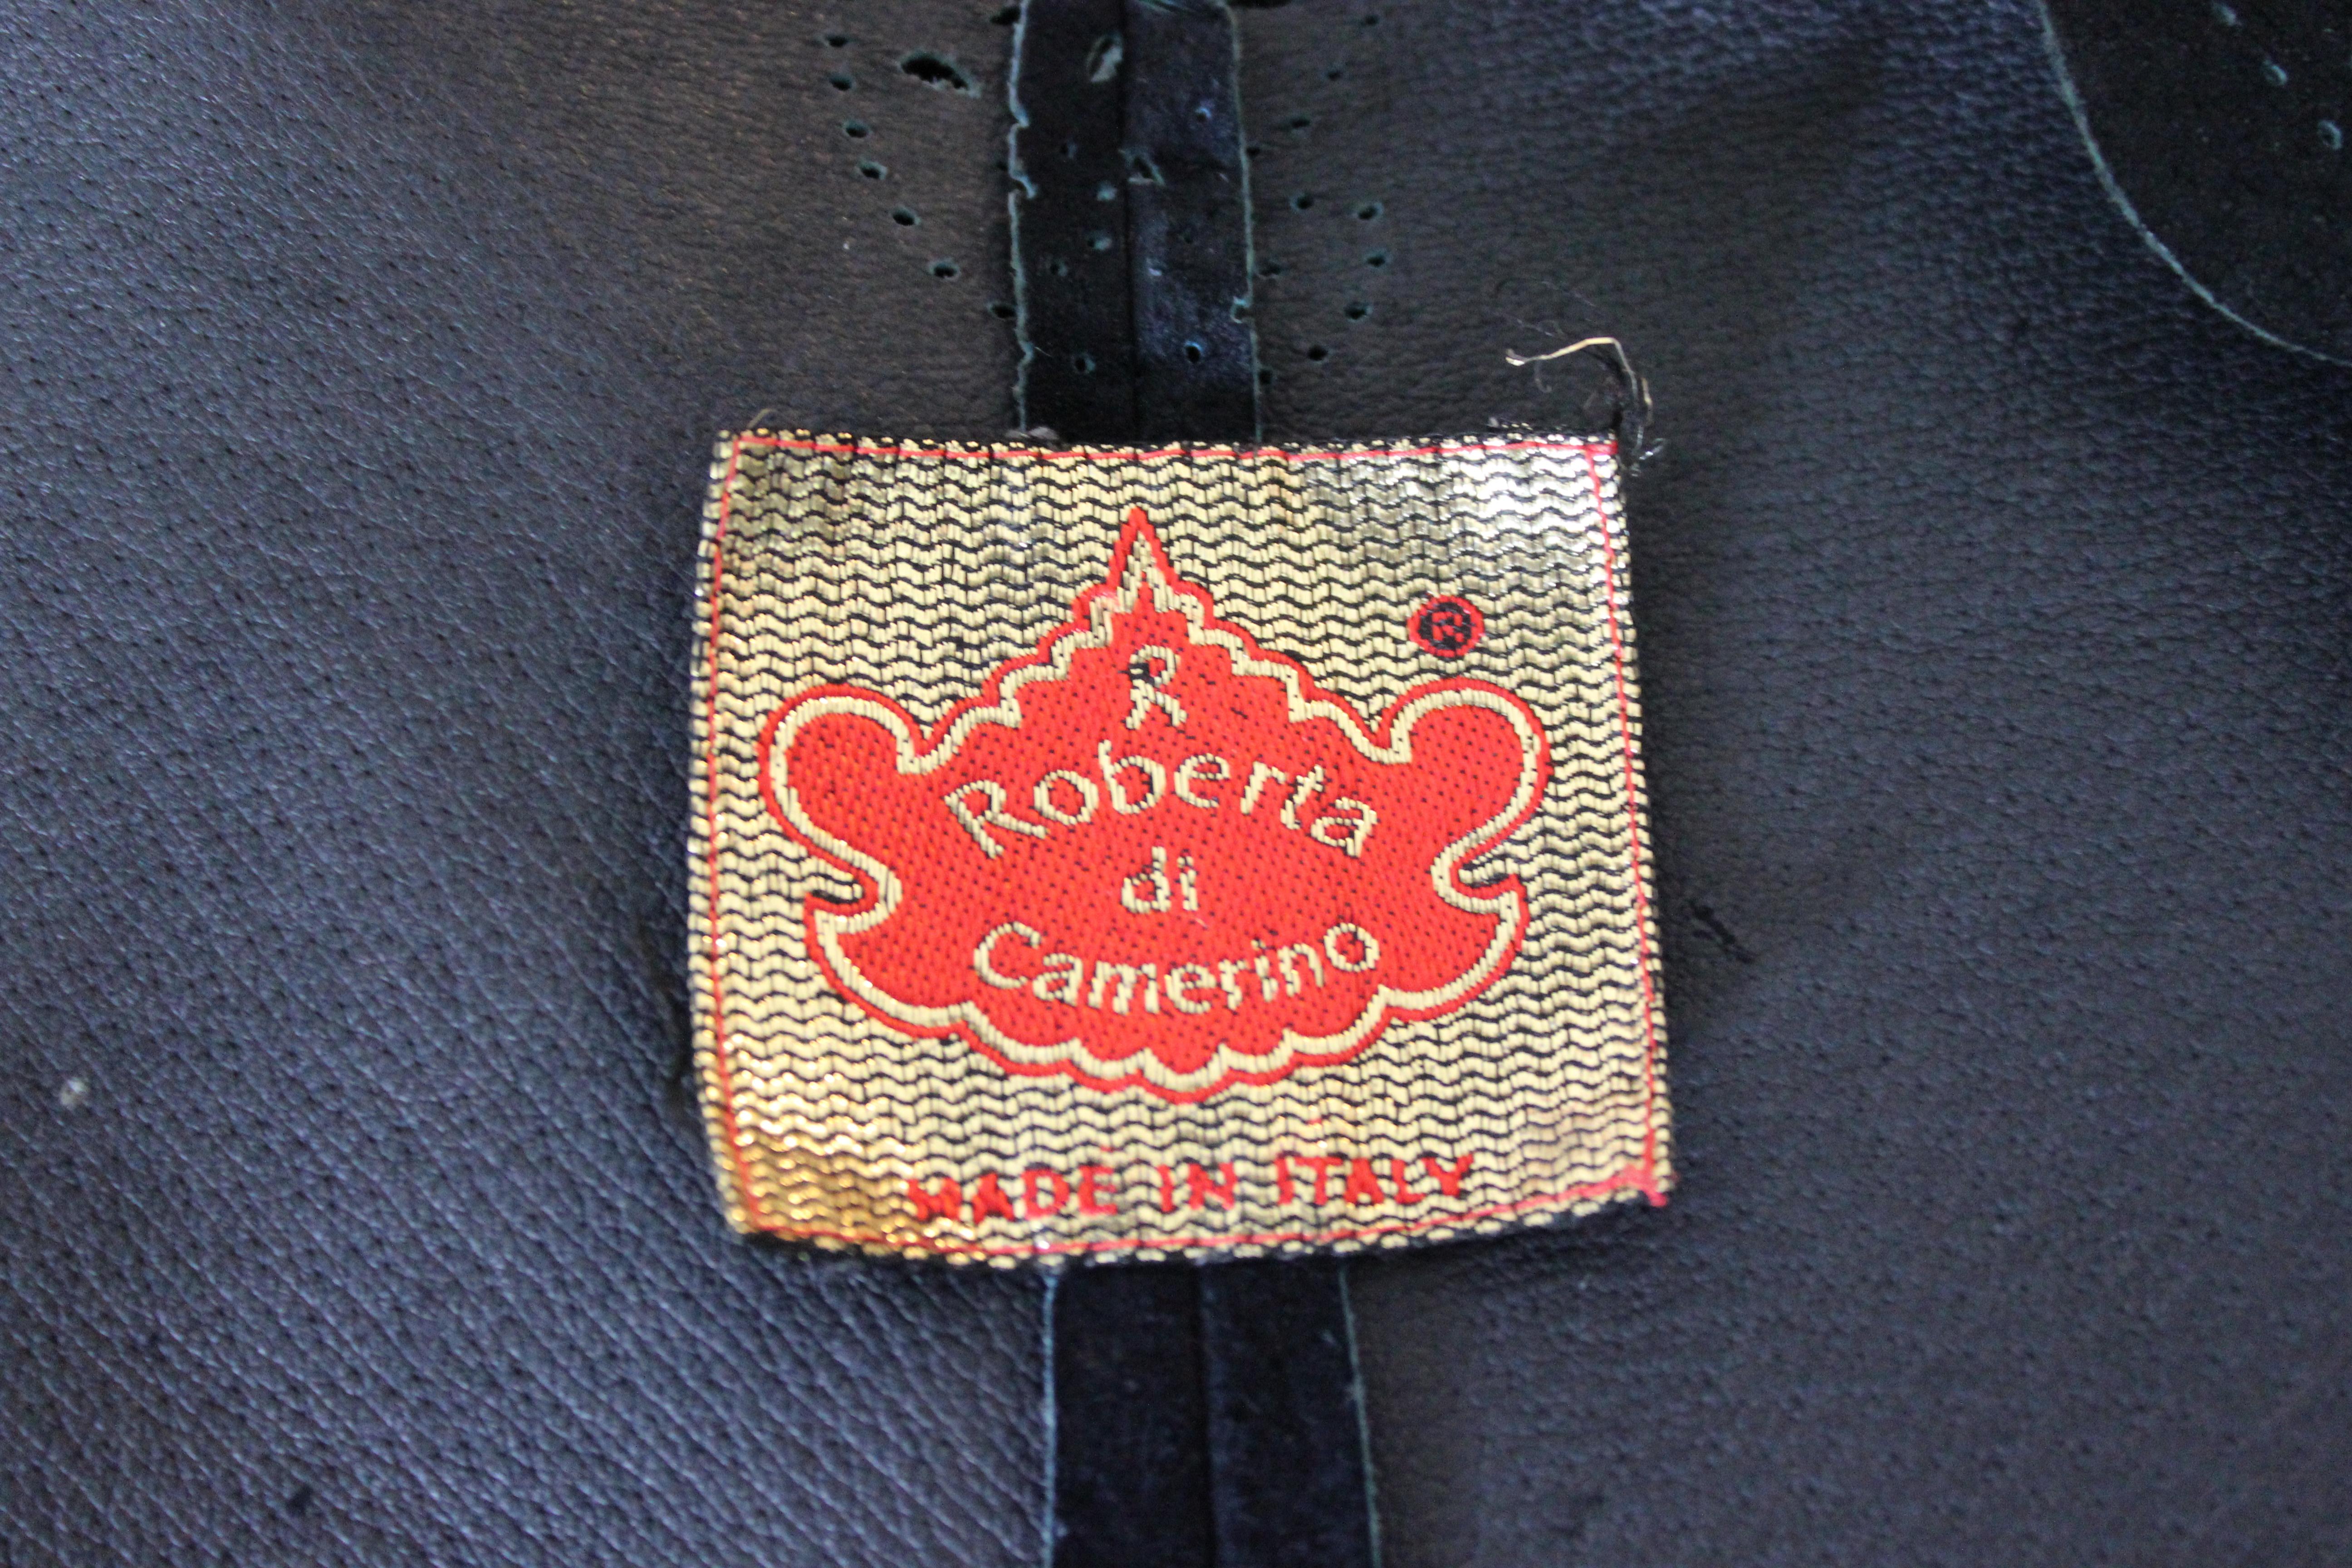 Women's Roberta di Camerino Blu Leather Suede Jacket 1980s